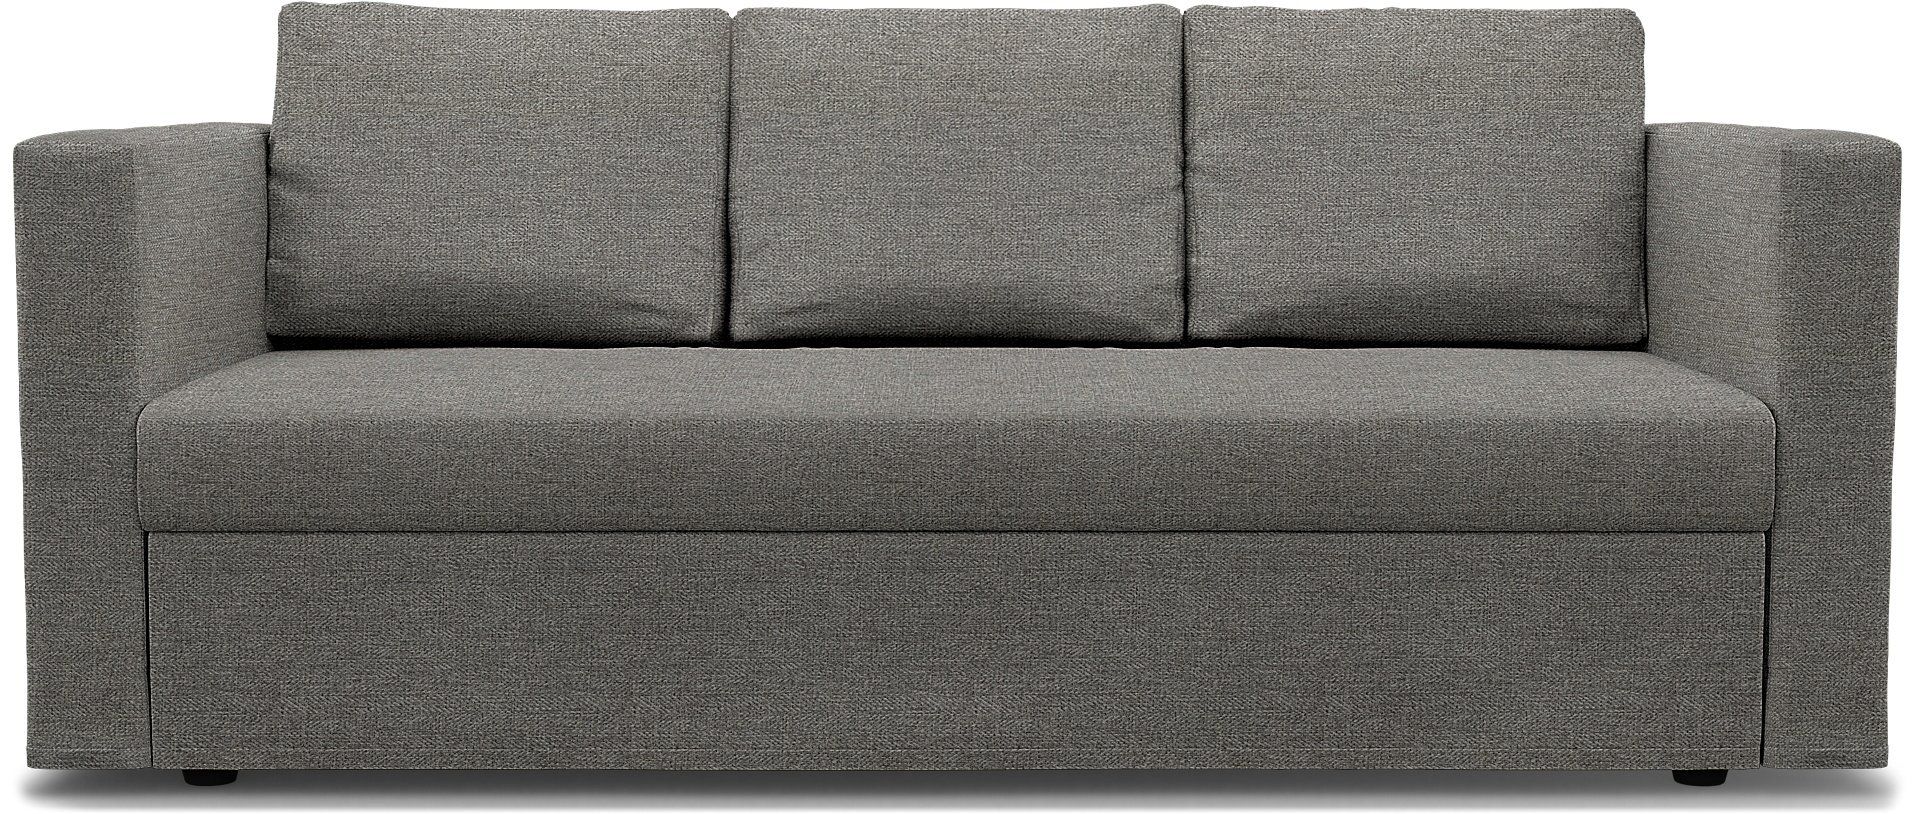 IKEA - Friheten 3 Seater Sofa Bed Cover, Taupe, Boucle & Texture - Bemz